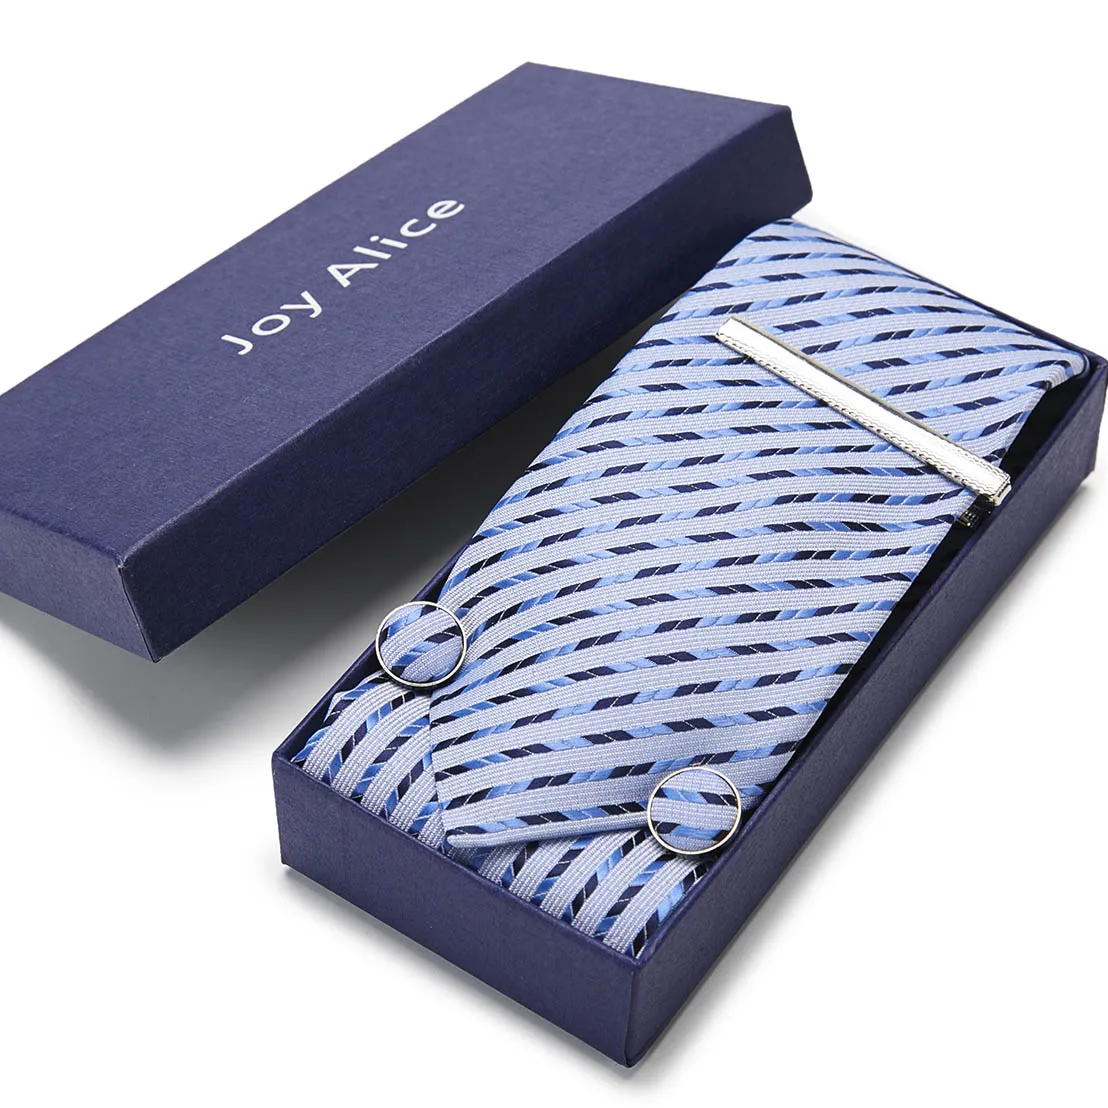 

Fashion Vangise Brand Wholesale Jacquard Silk Tie Pocket Squares Cufflink Set Necktie Box Sky Blue Striped Fit Formal Party